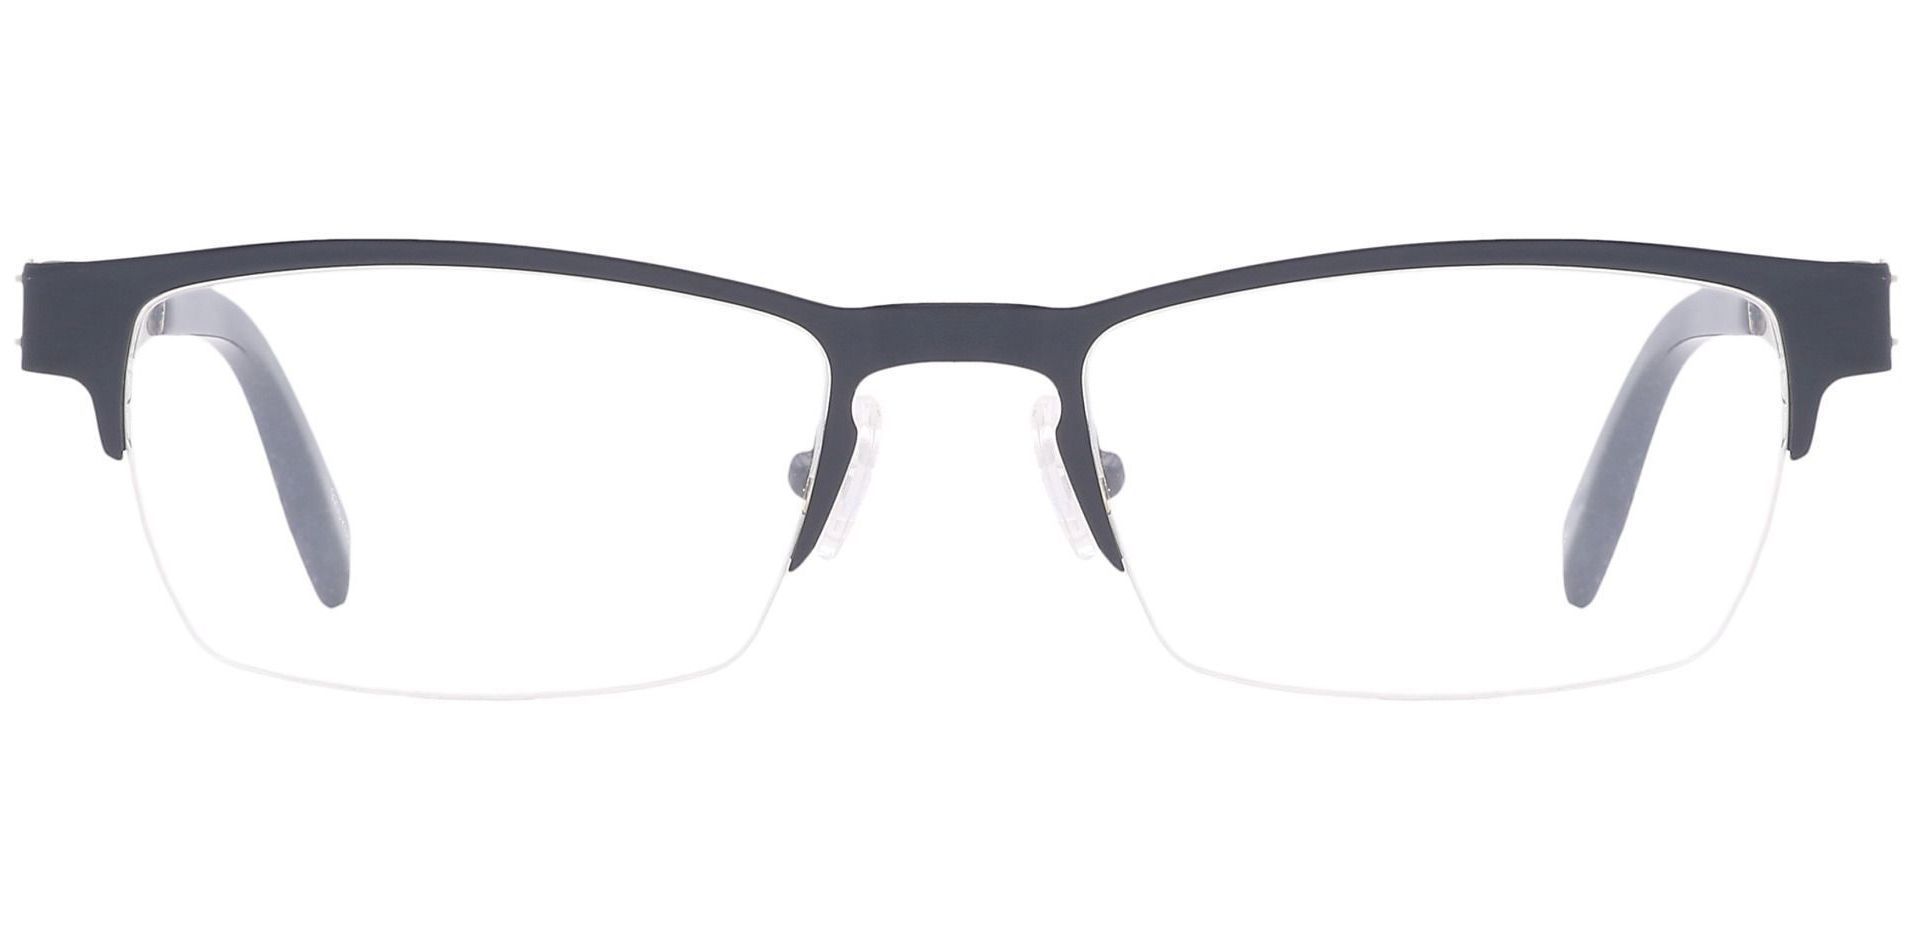 Stefani Rectangle Progressive Glasses - Black